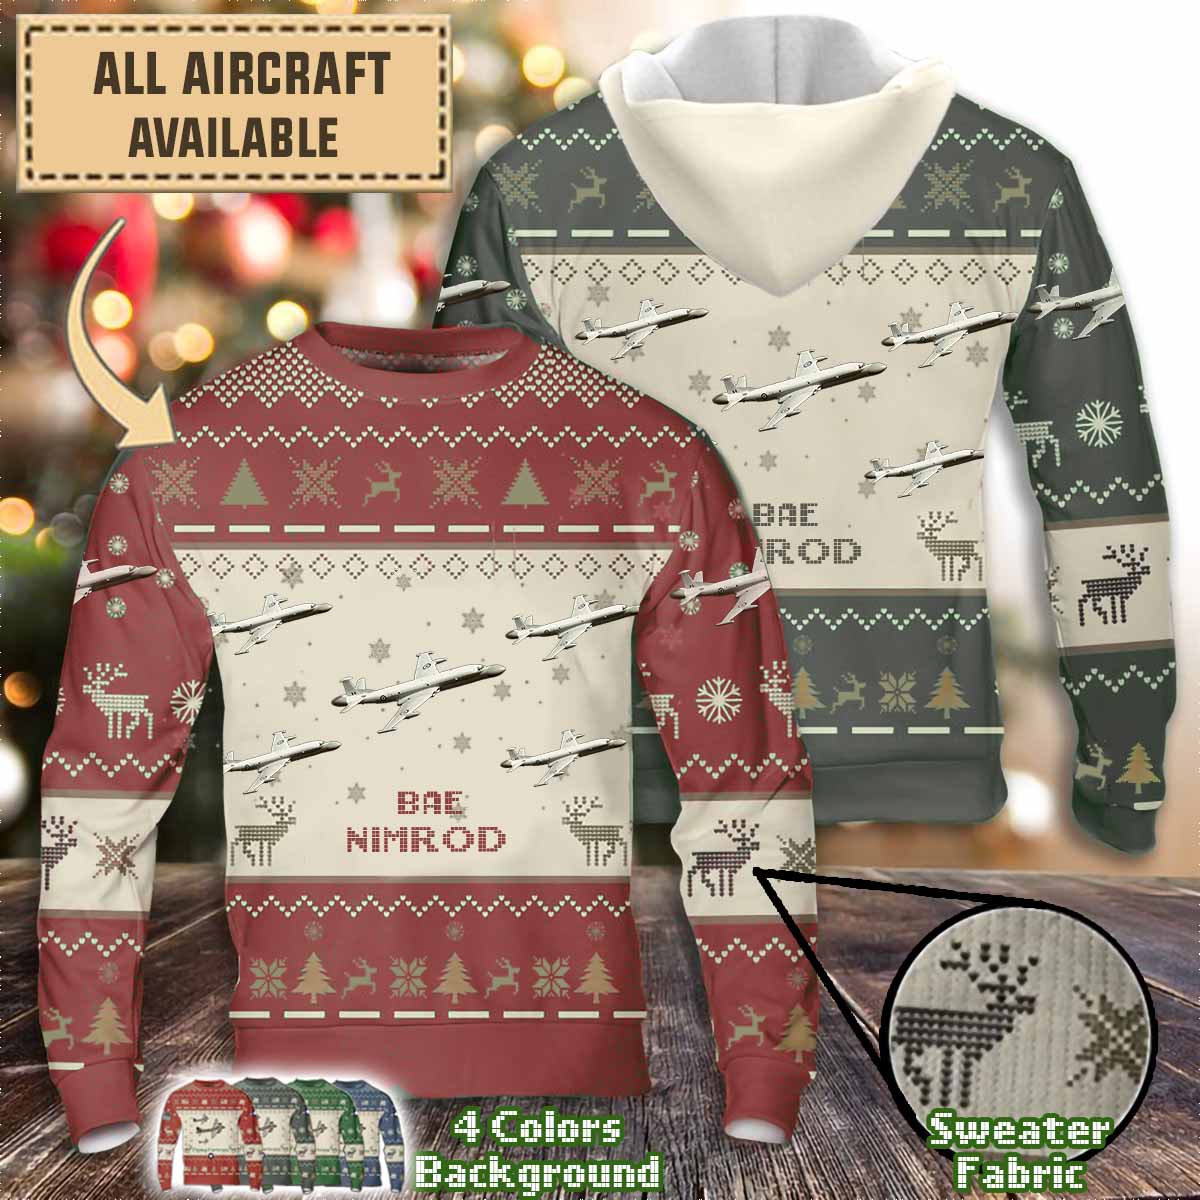 bae nimrod aircraft sweater 2etoc